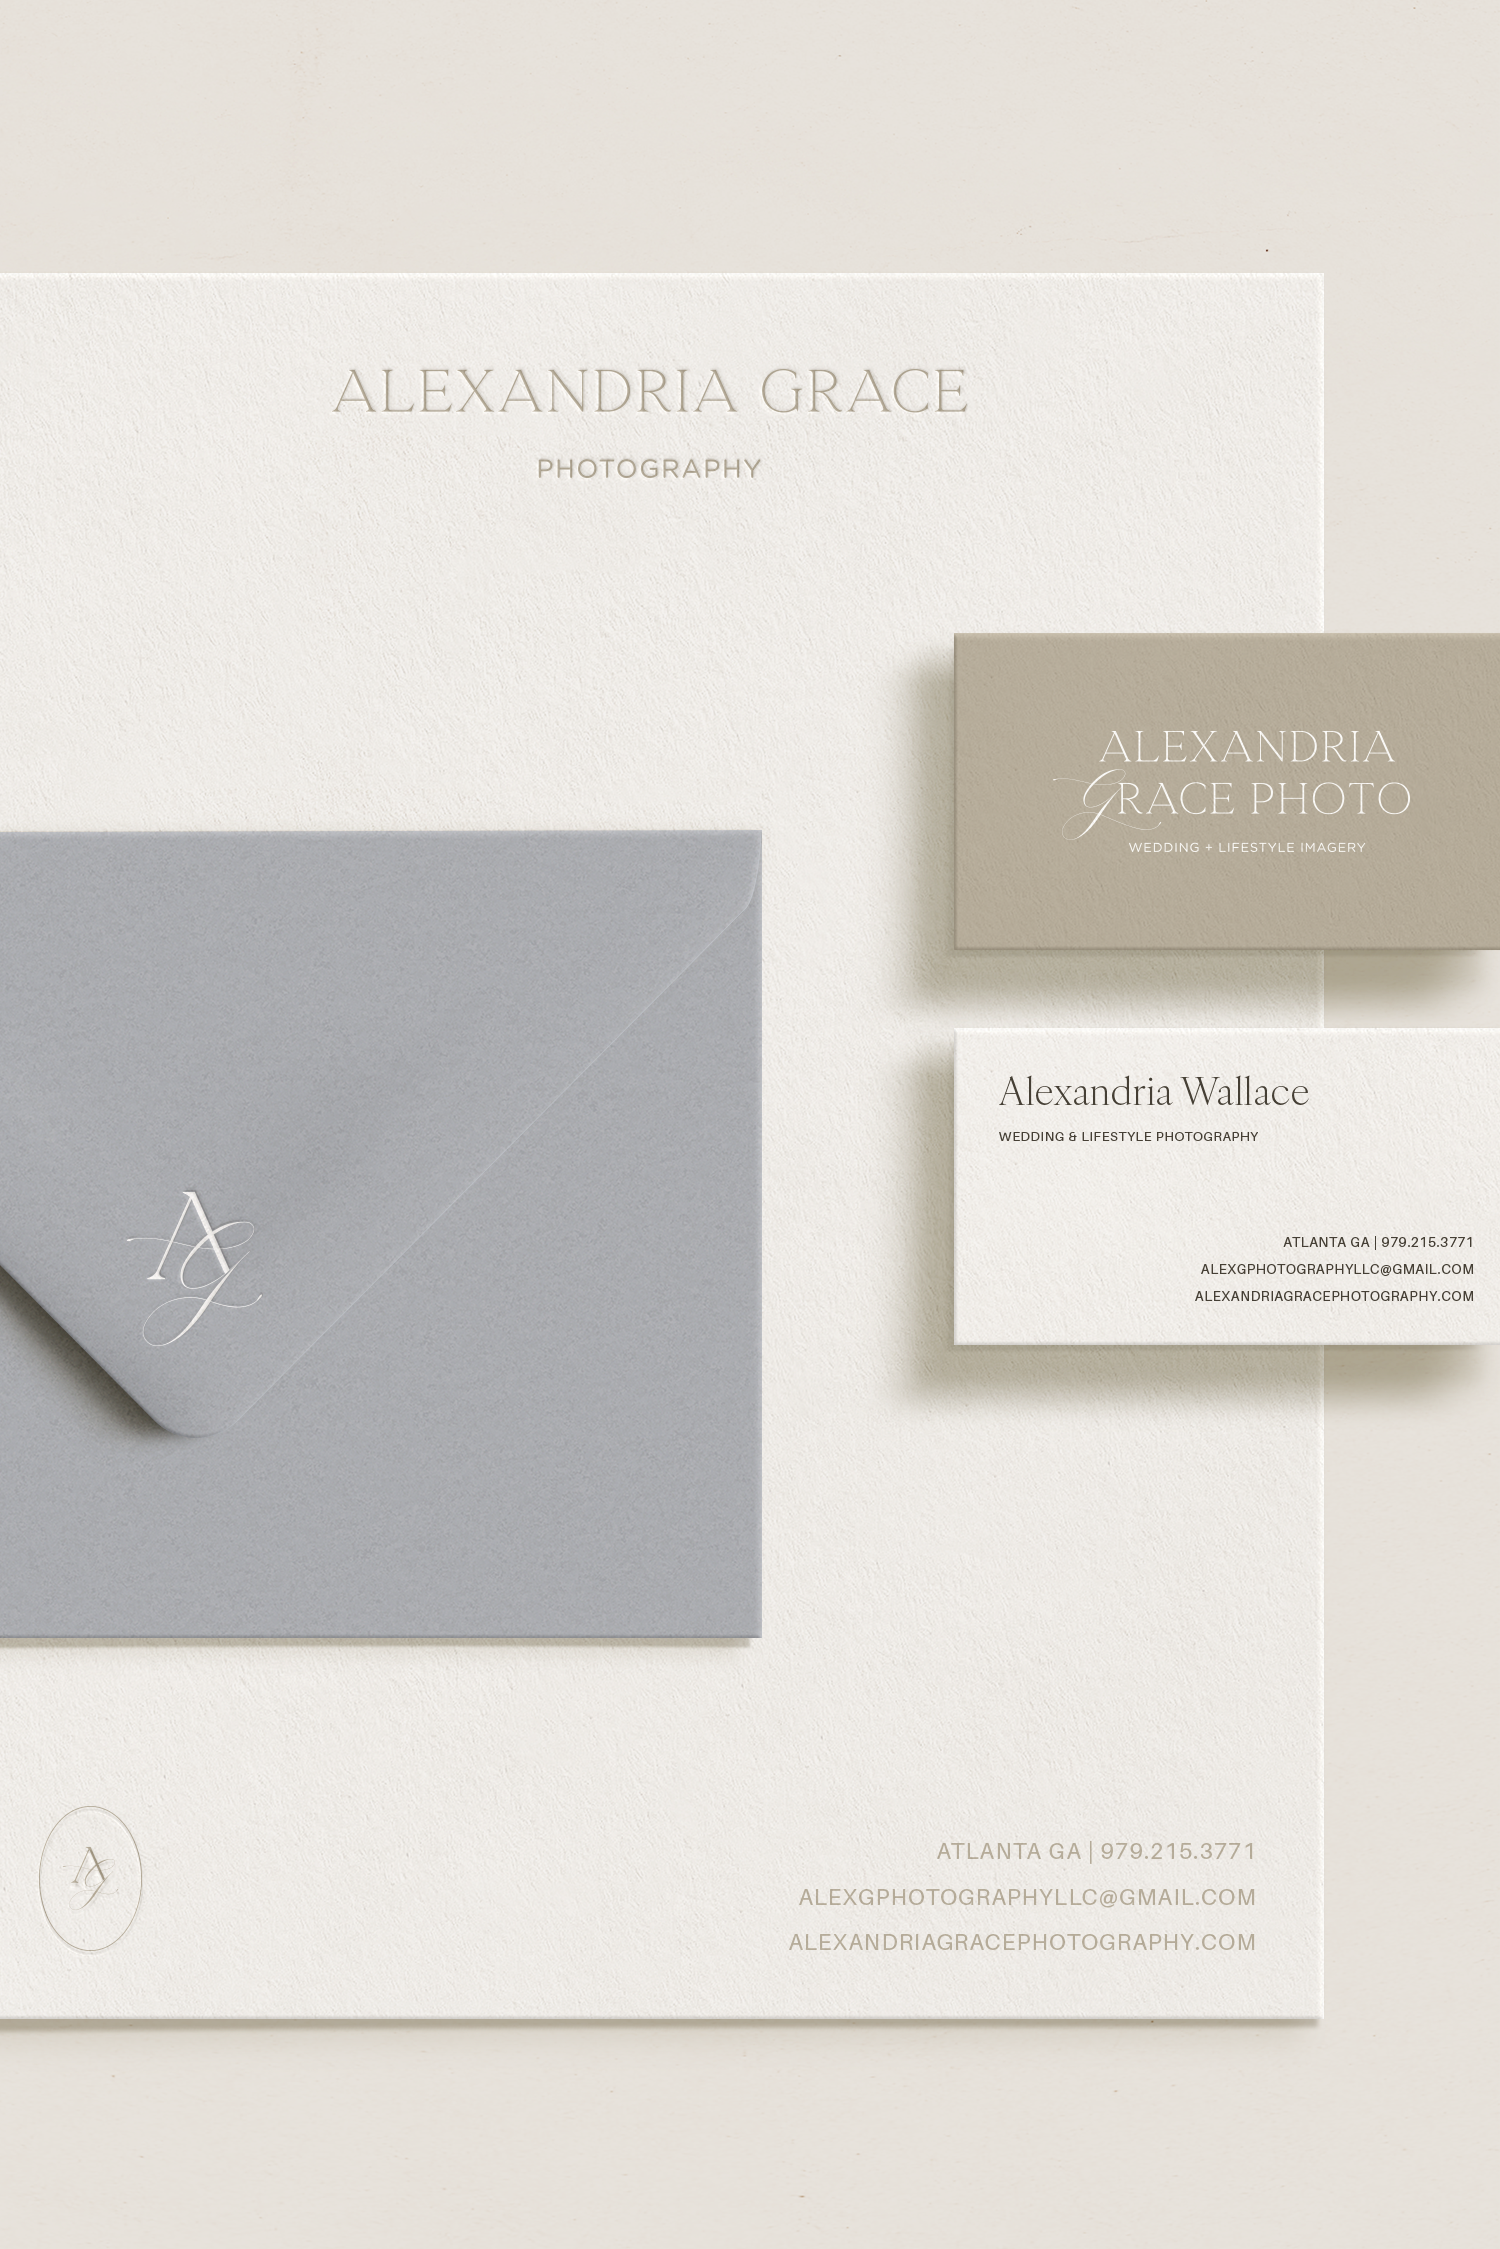 Elegant Brand Design for Photographer Alexandria Grace